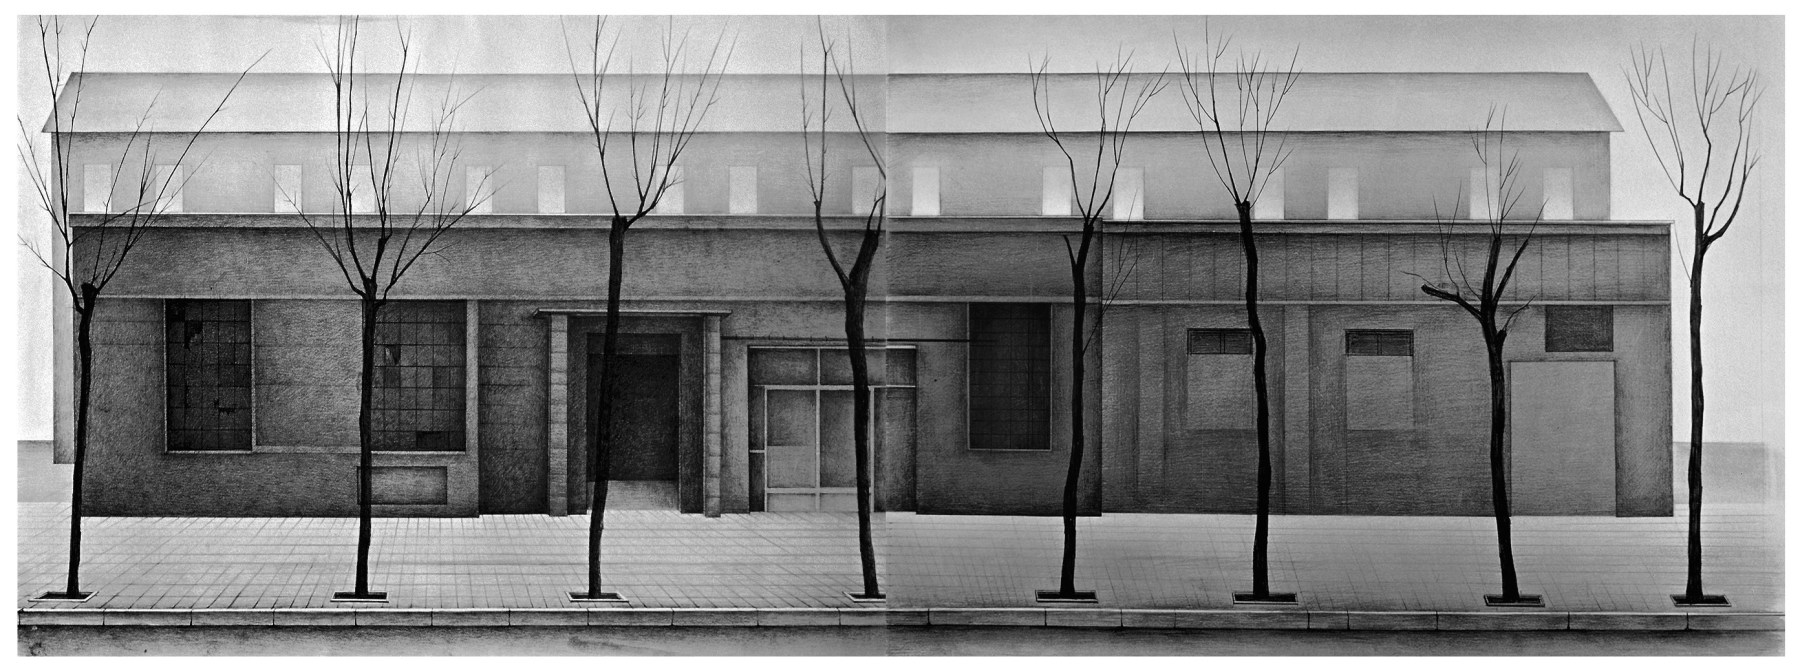 Zhang Dun 张盾&nbsp;(b. 1979), Street Scene No. 4&nbsp;街景系列-4